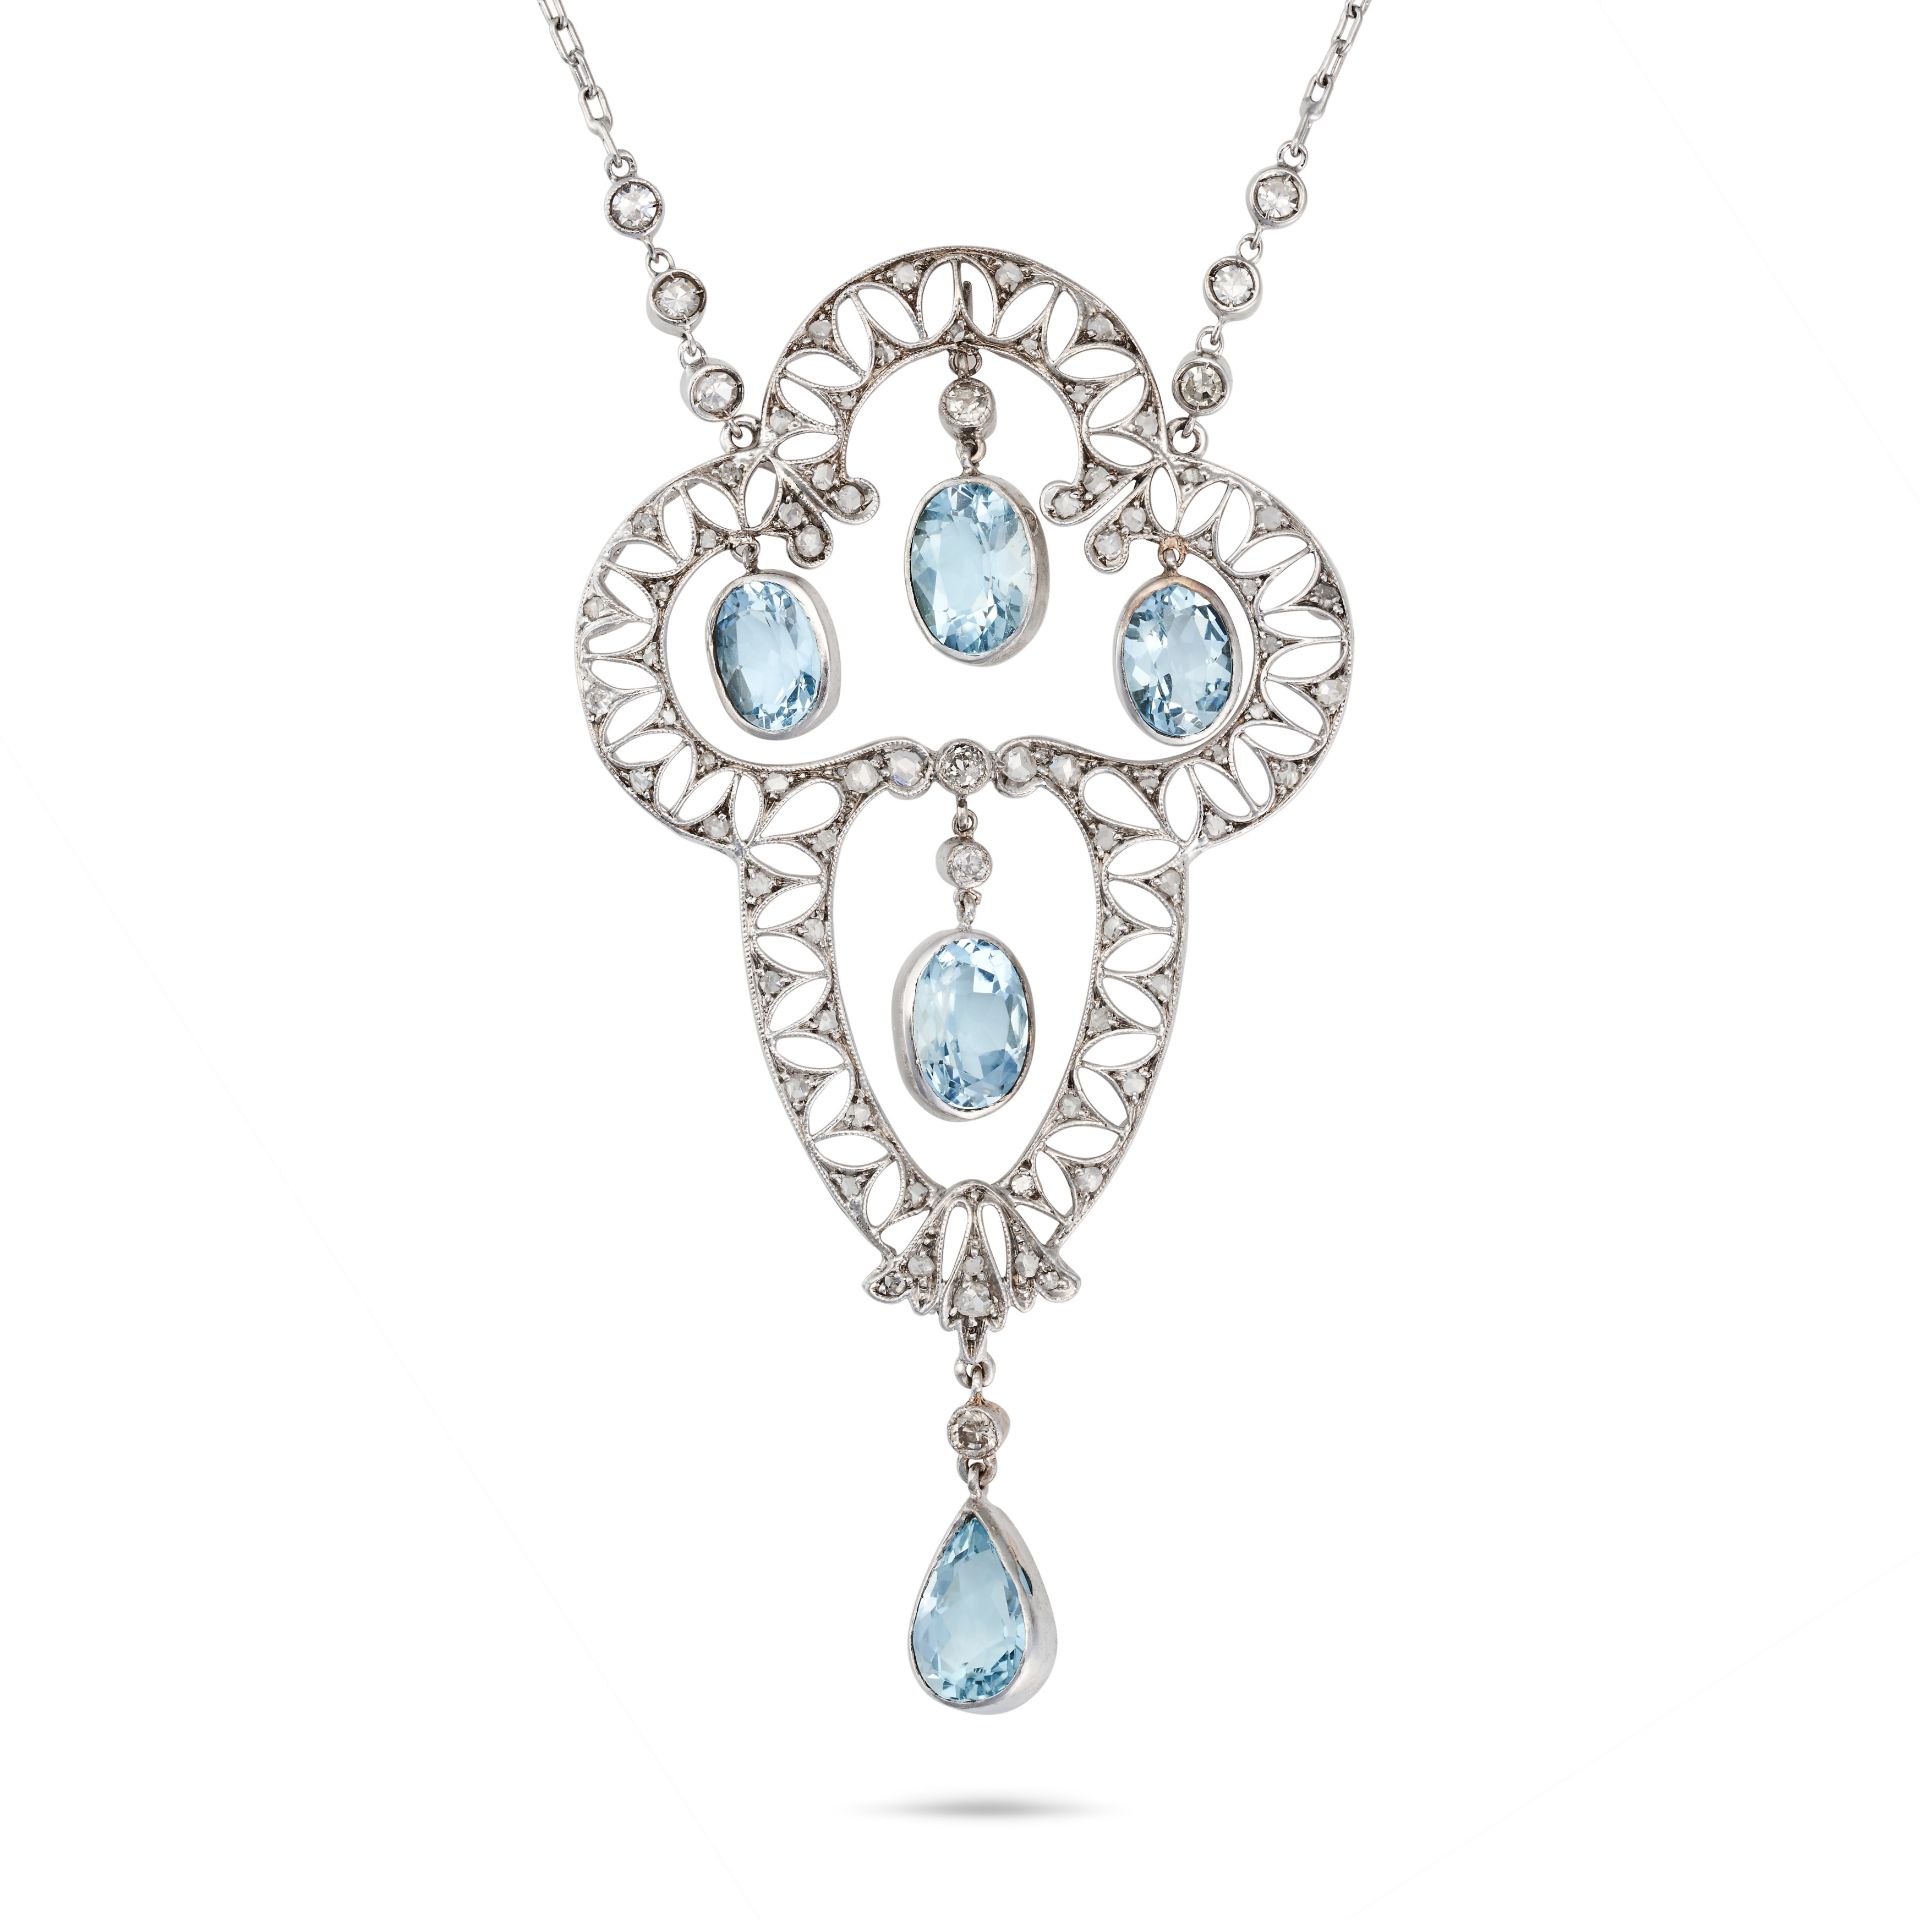 AN AQUAMARINE AND DIAMOND PENDANT NECKLACE the openwork pendant set with rose cut diamonds suspen...